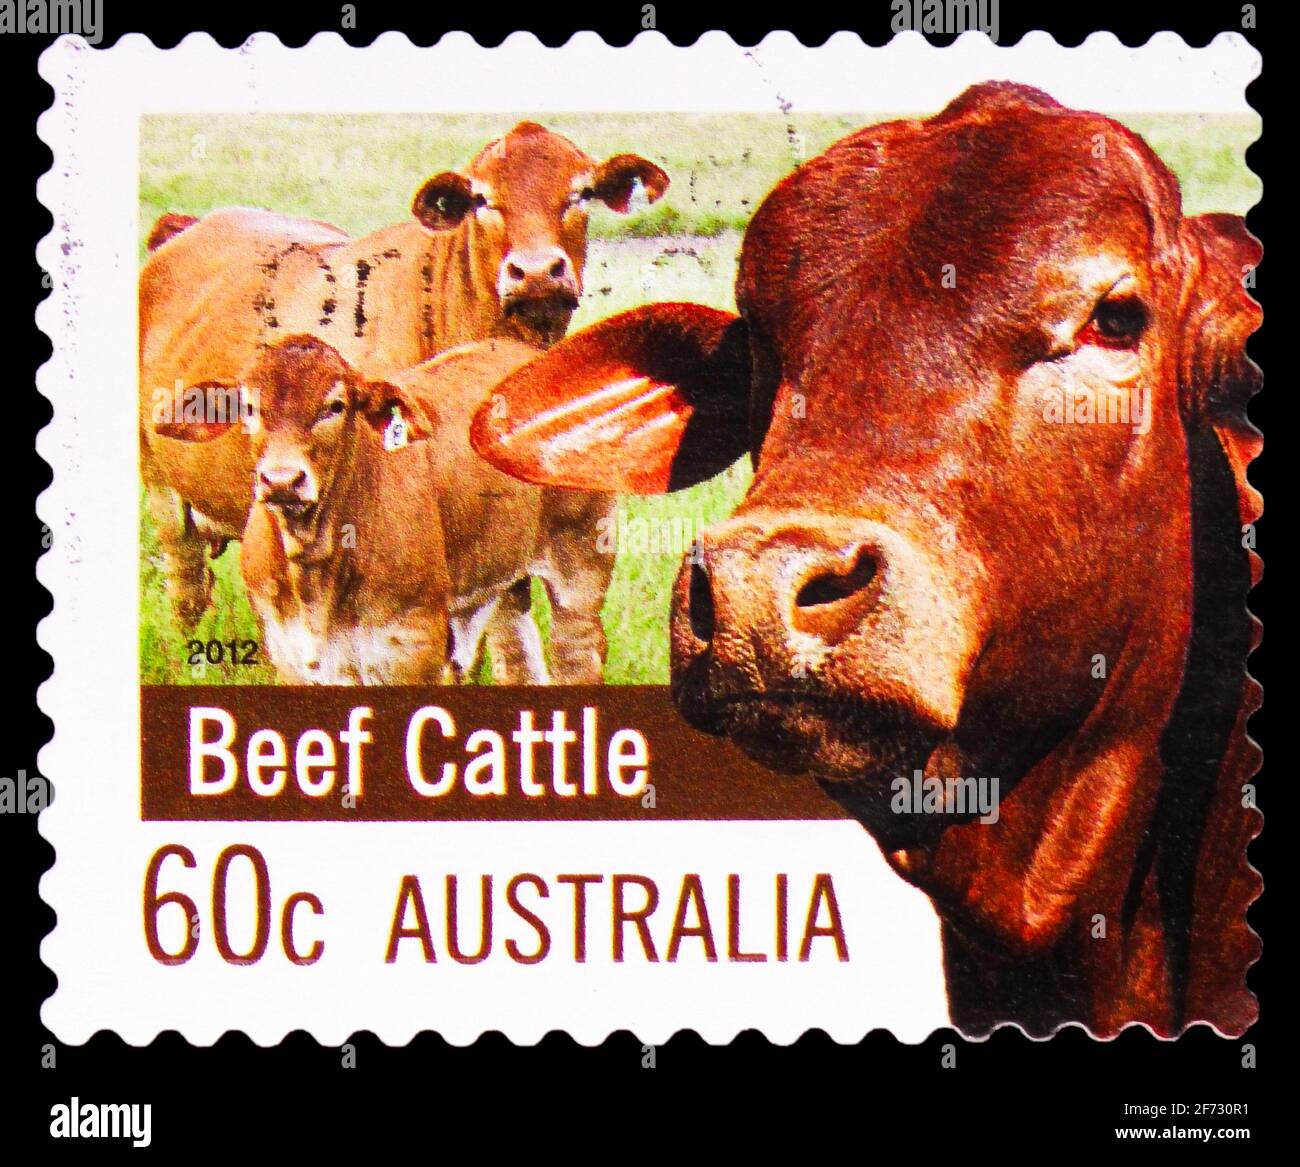 MOSKAU, RUSSLAND - 12. JANUAR 2021: Die in Australien gedruckte Briefmarke zeigt Rinder (Bos primigenius taurus), Farming Australia (2nd Series) Serie Stockfoto